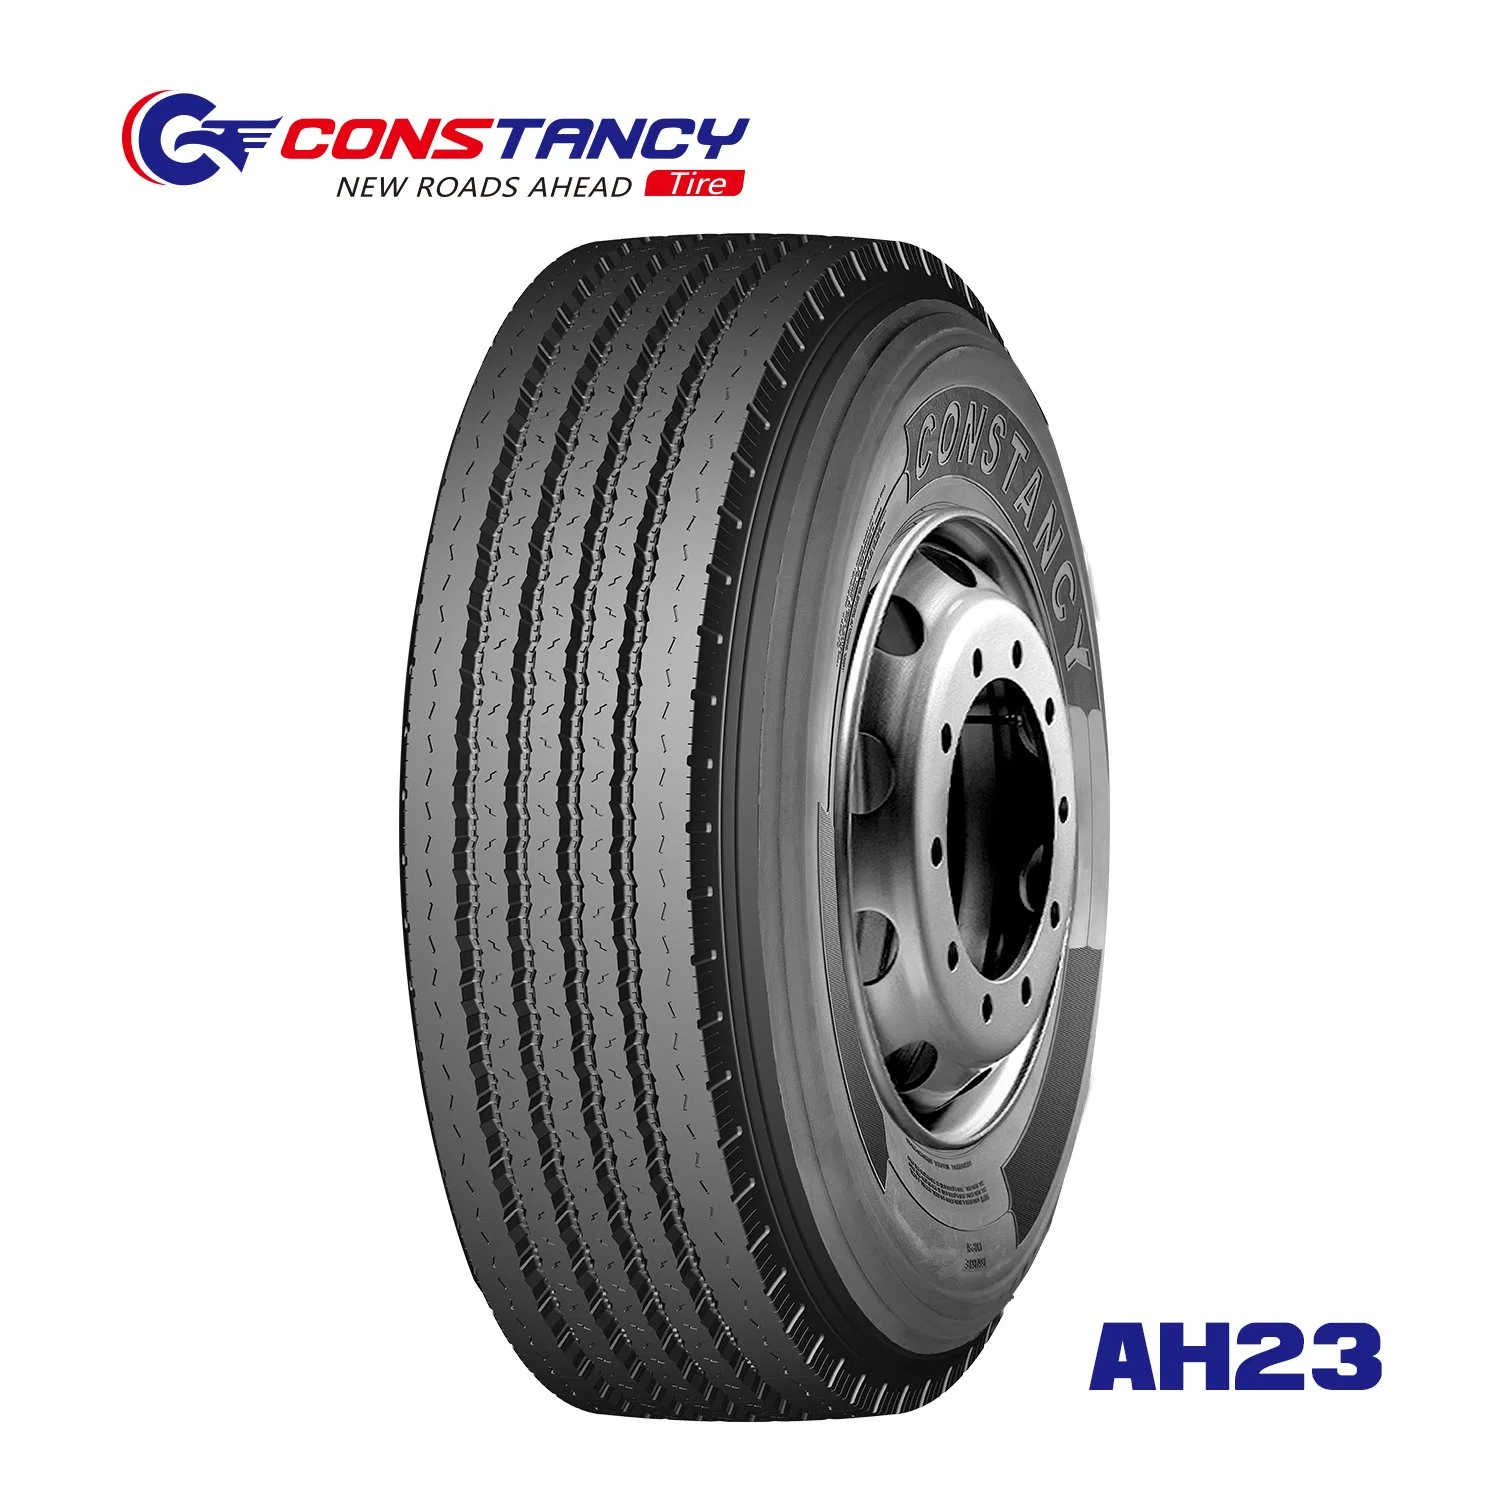 Constancy Ah23 Radial Truck Bus Tyre (7.50R16)